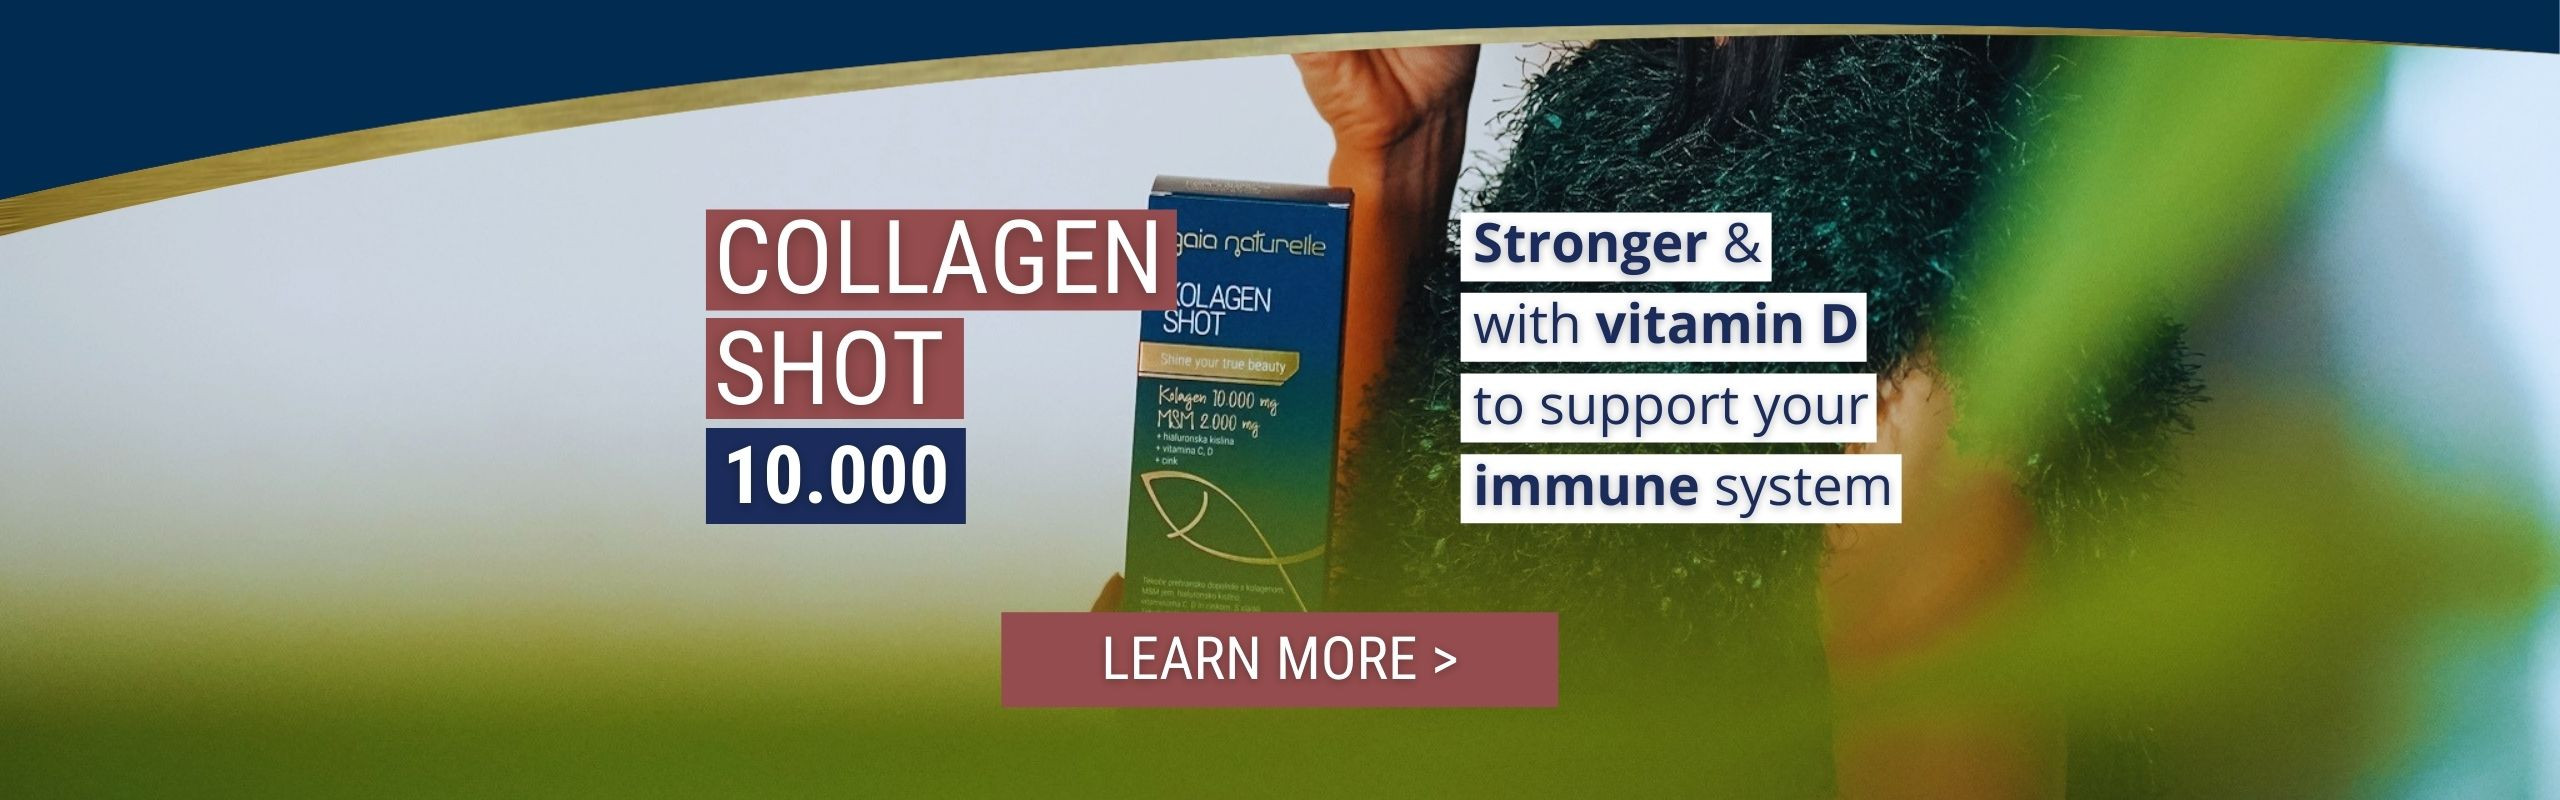 New! Collagen shot 10.000 mg